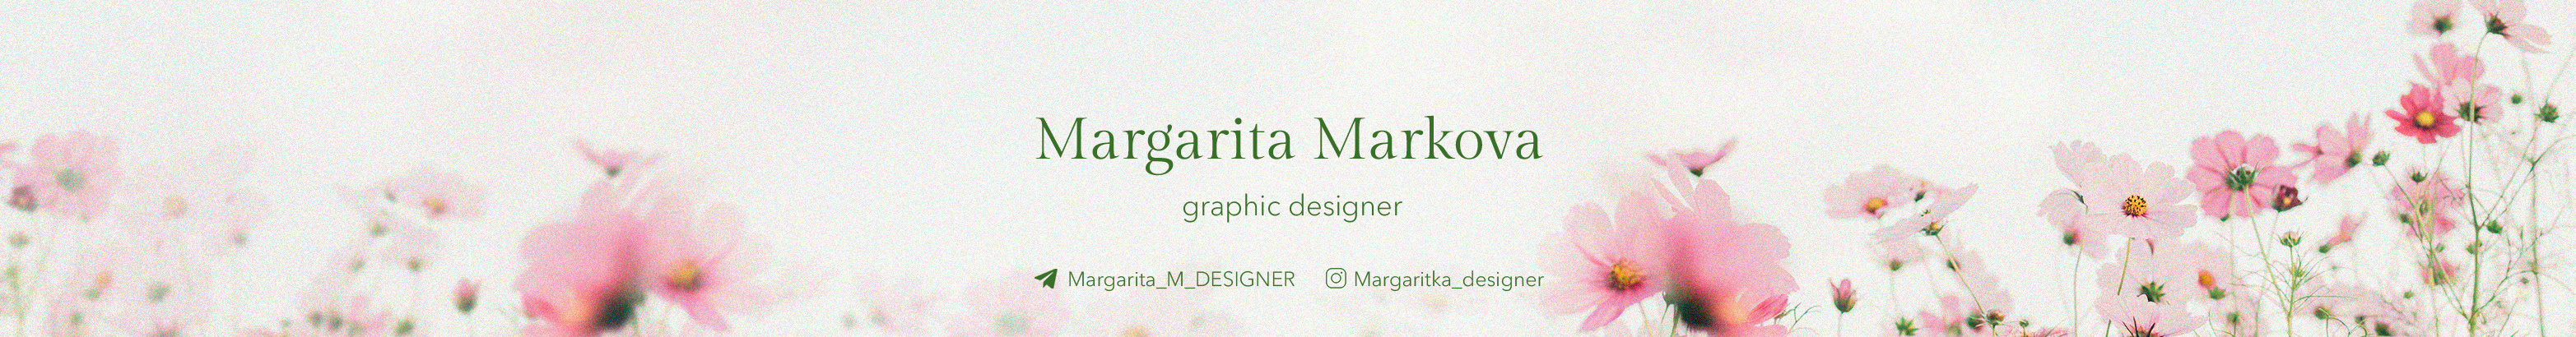 Баннер профиля Margarita Markova